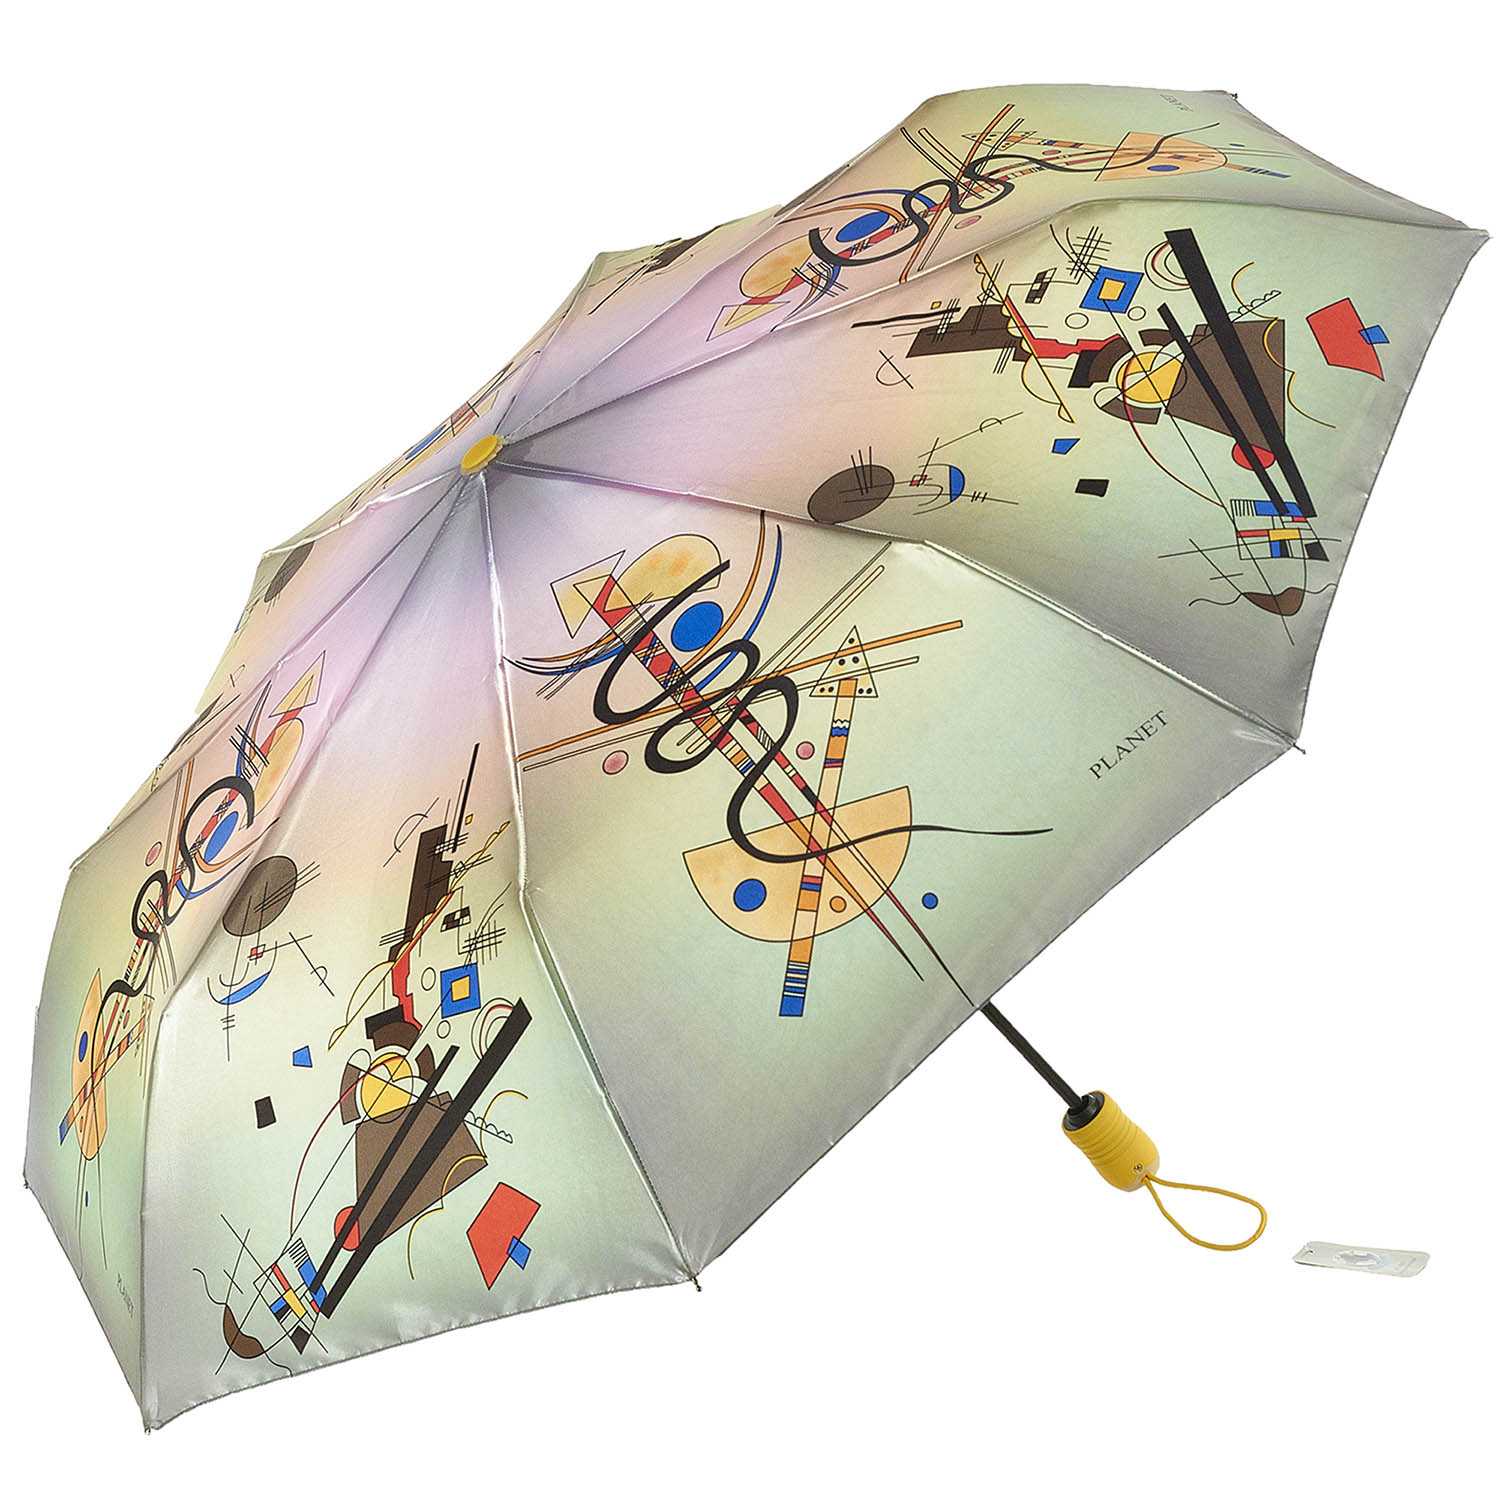 Купить зонт женский на озон. Зонт Zontaly 913 16248. RN 114837 зонт. Japan Pat 124153 зонт. Fulton зонт вайлдберриз.